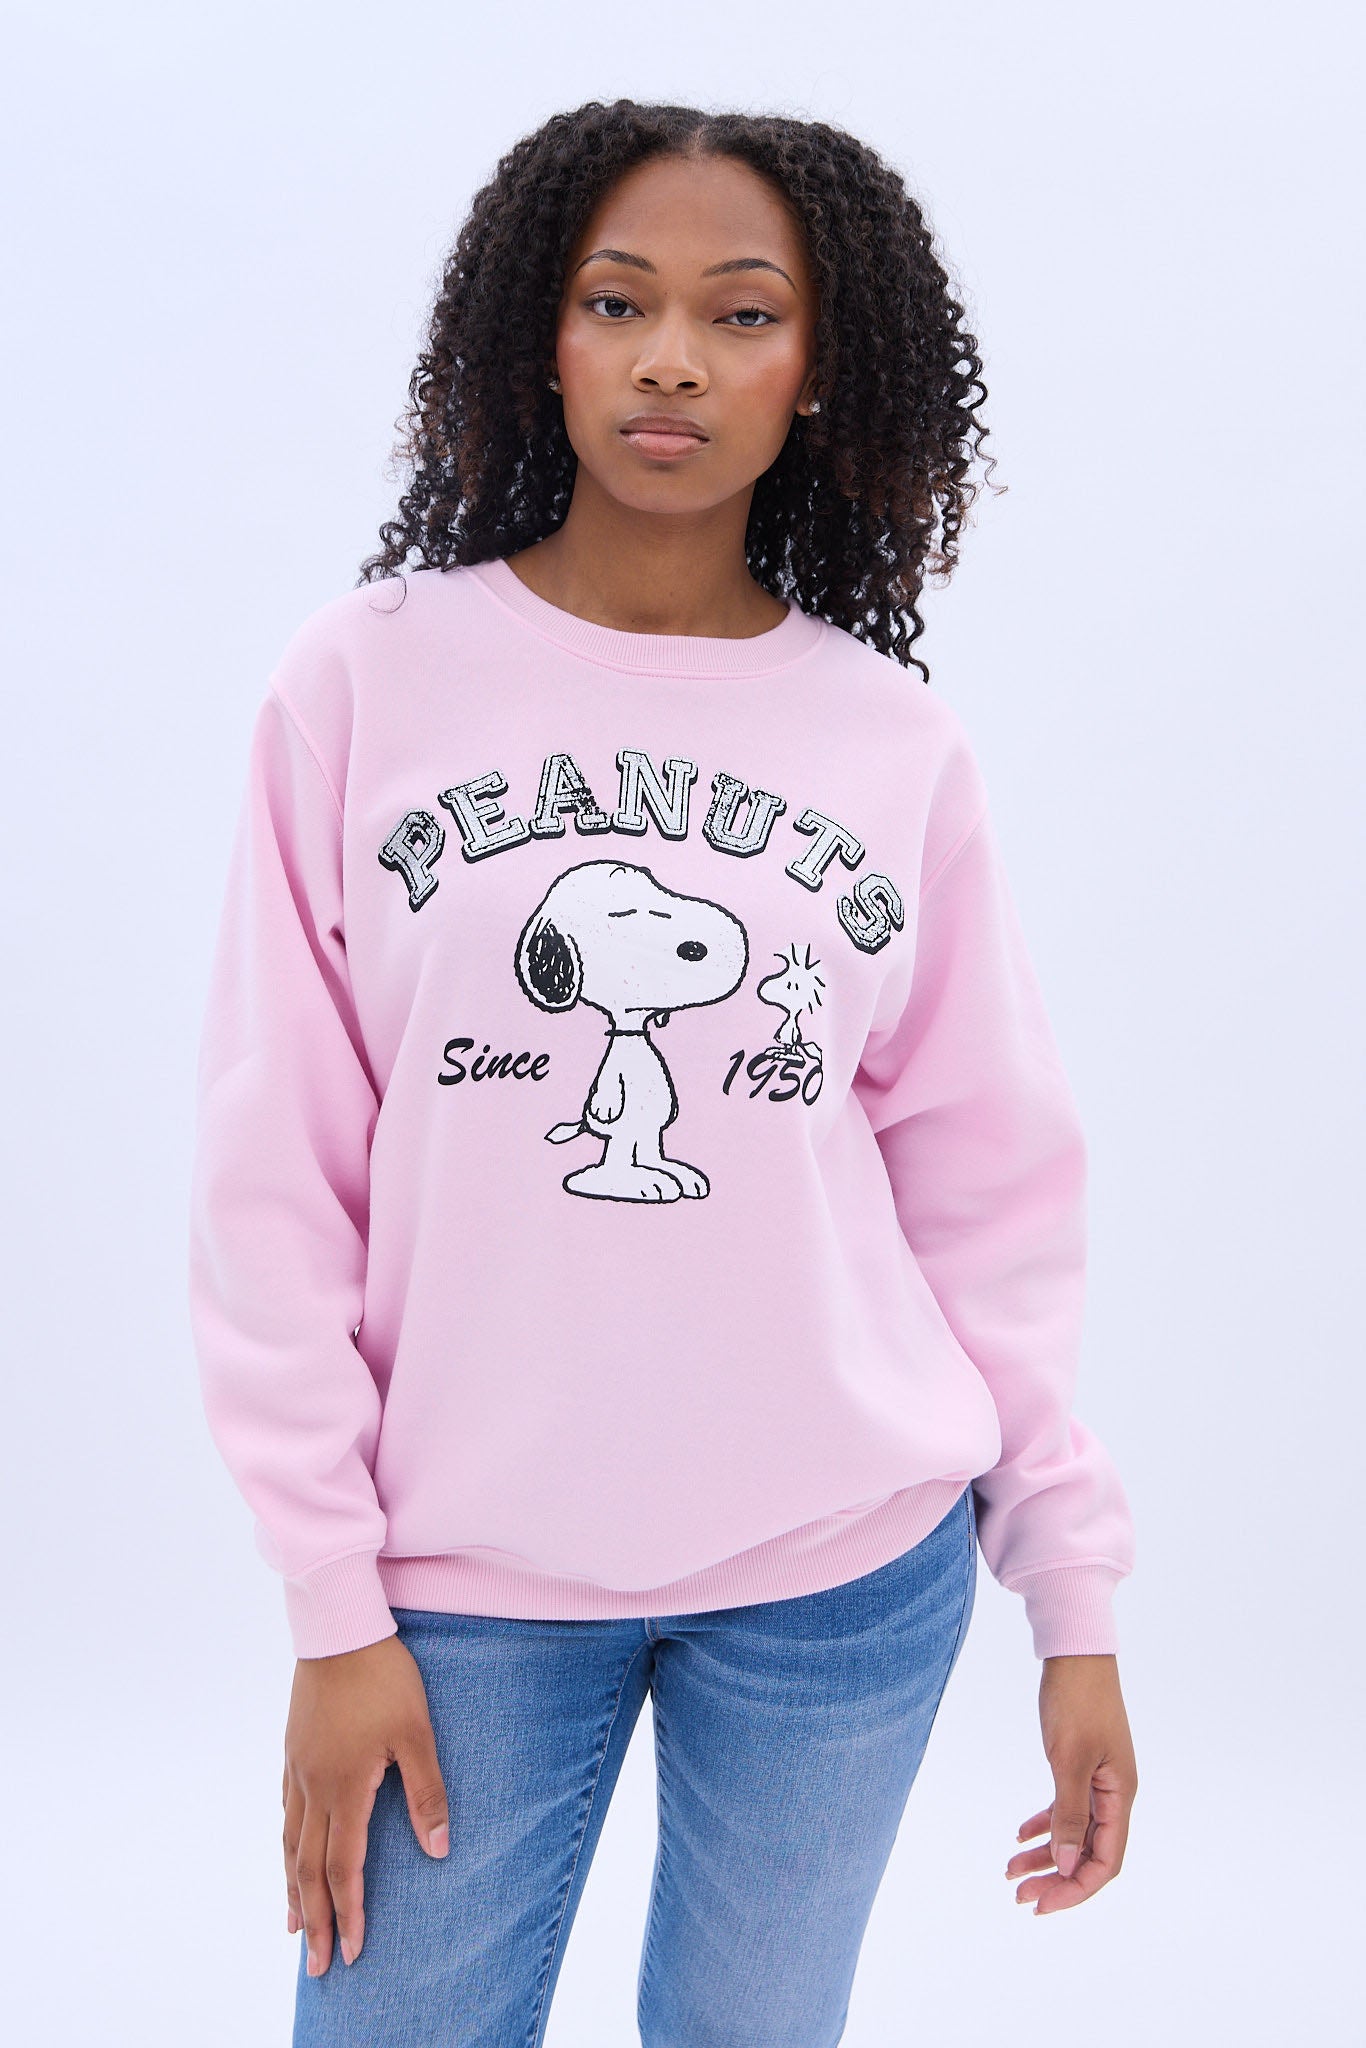 Peanuts Snoopy 1950 Graphic Crew Neck Sweatshirt